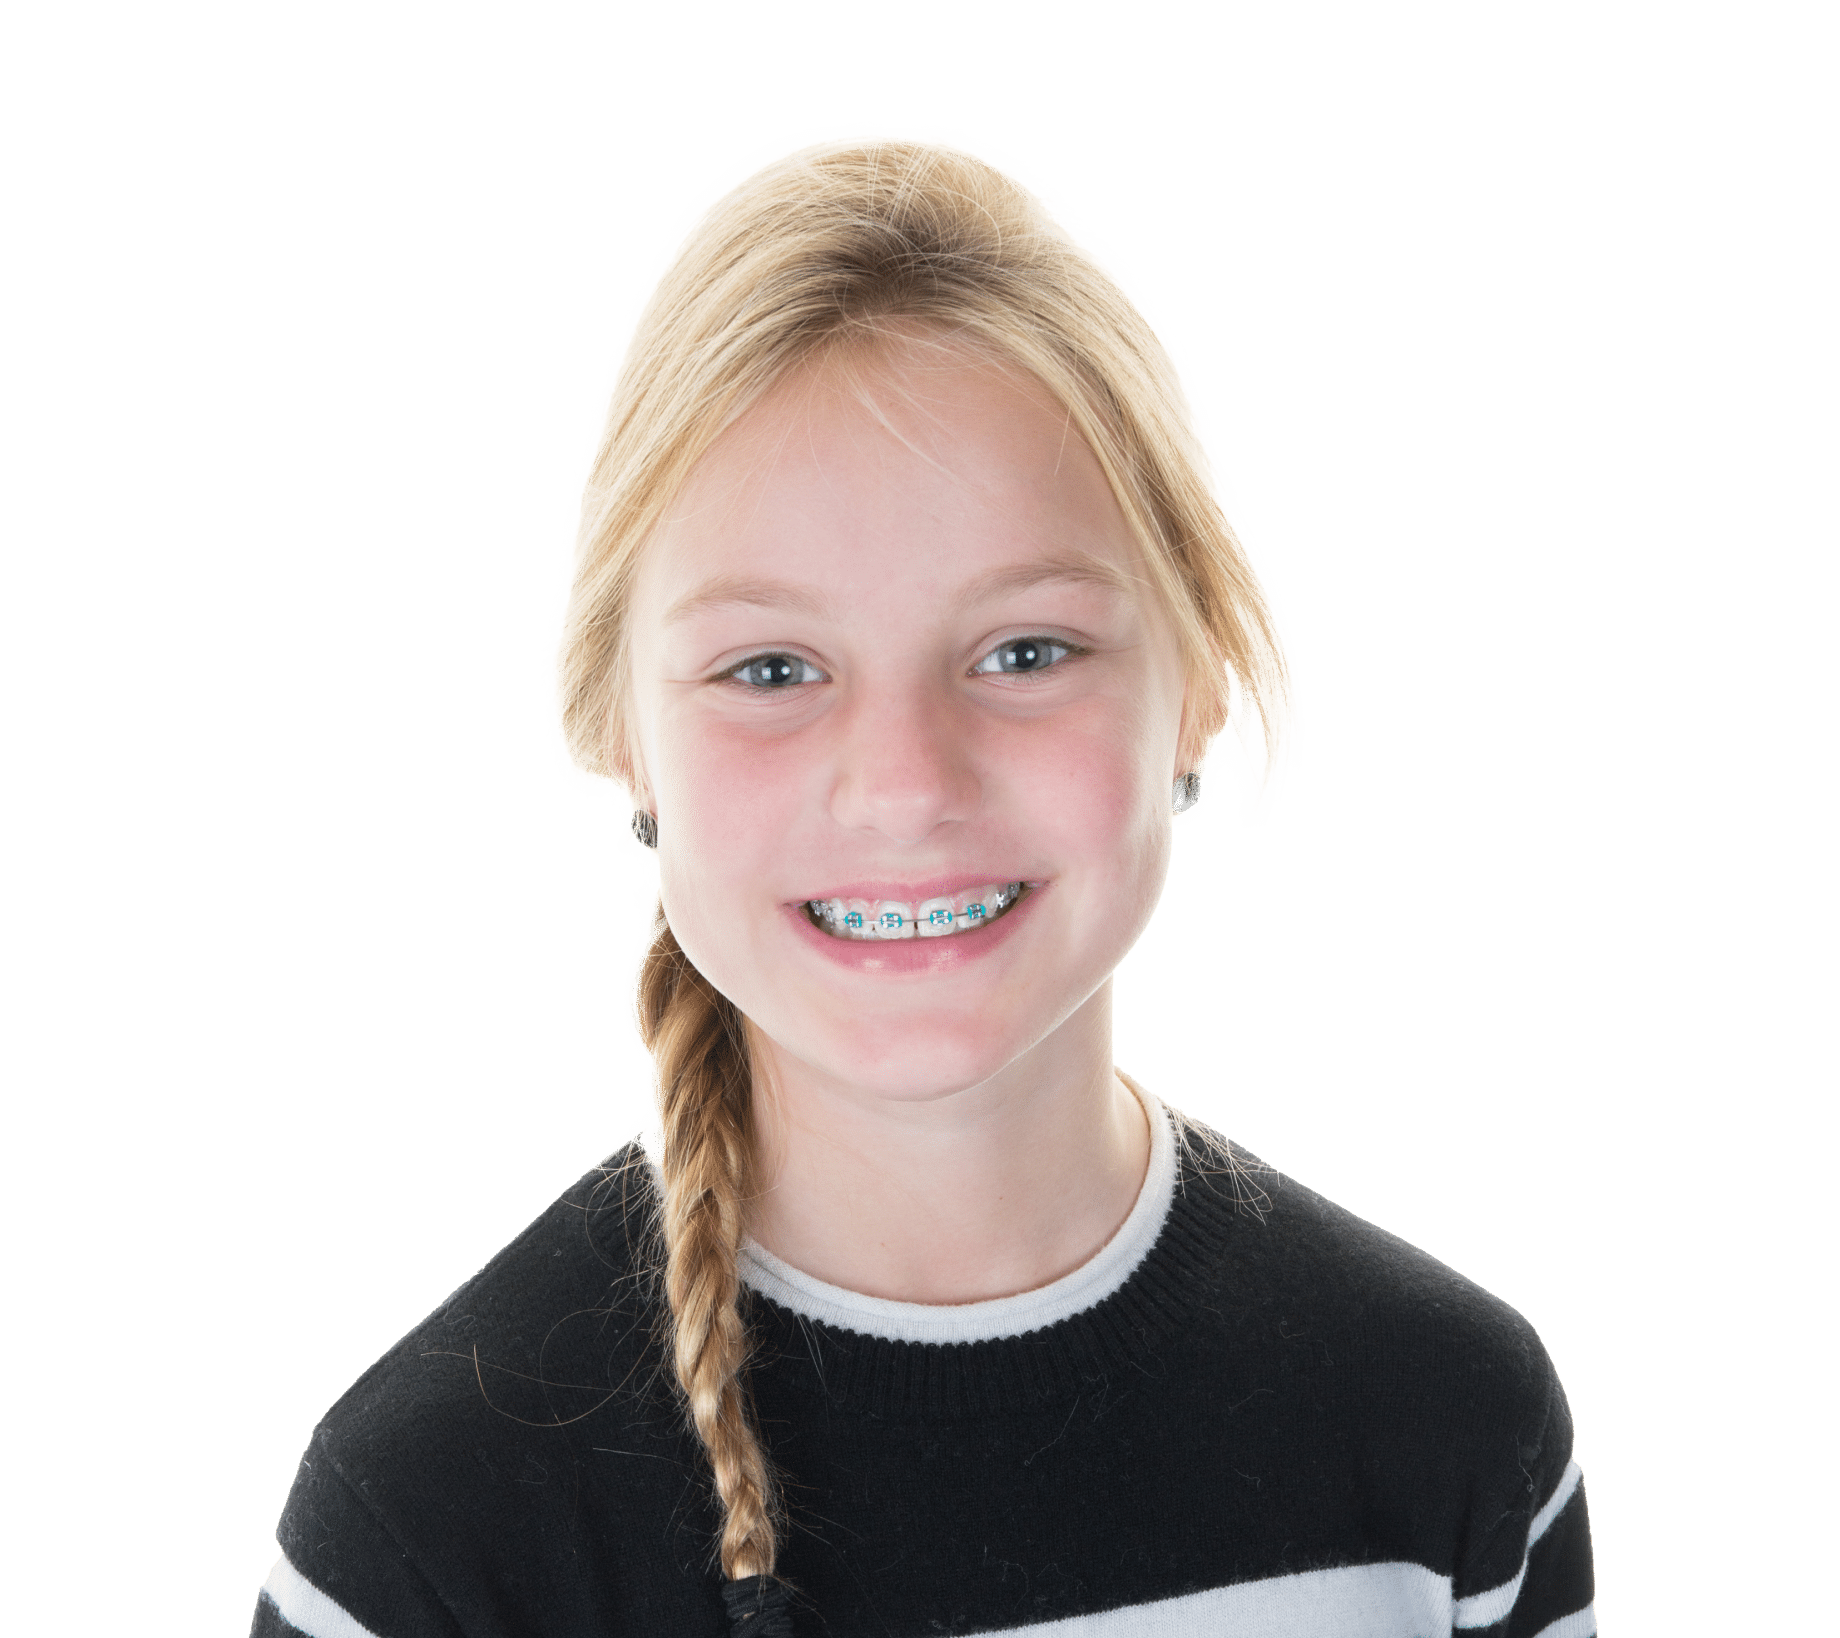 Girl with dental braces